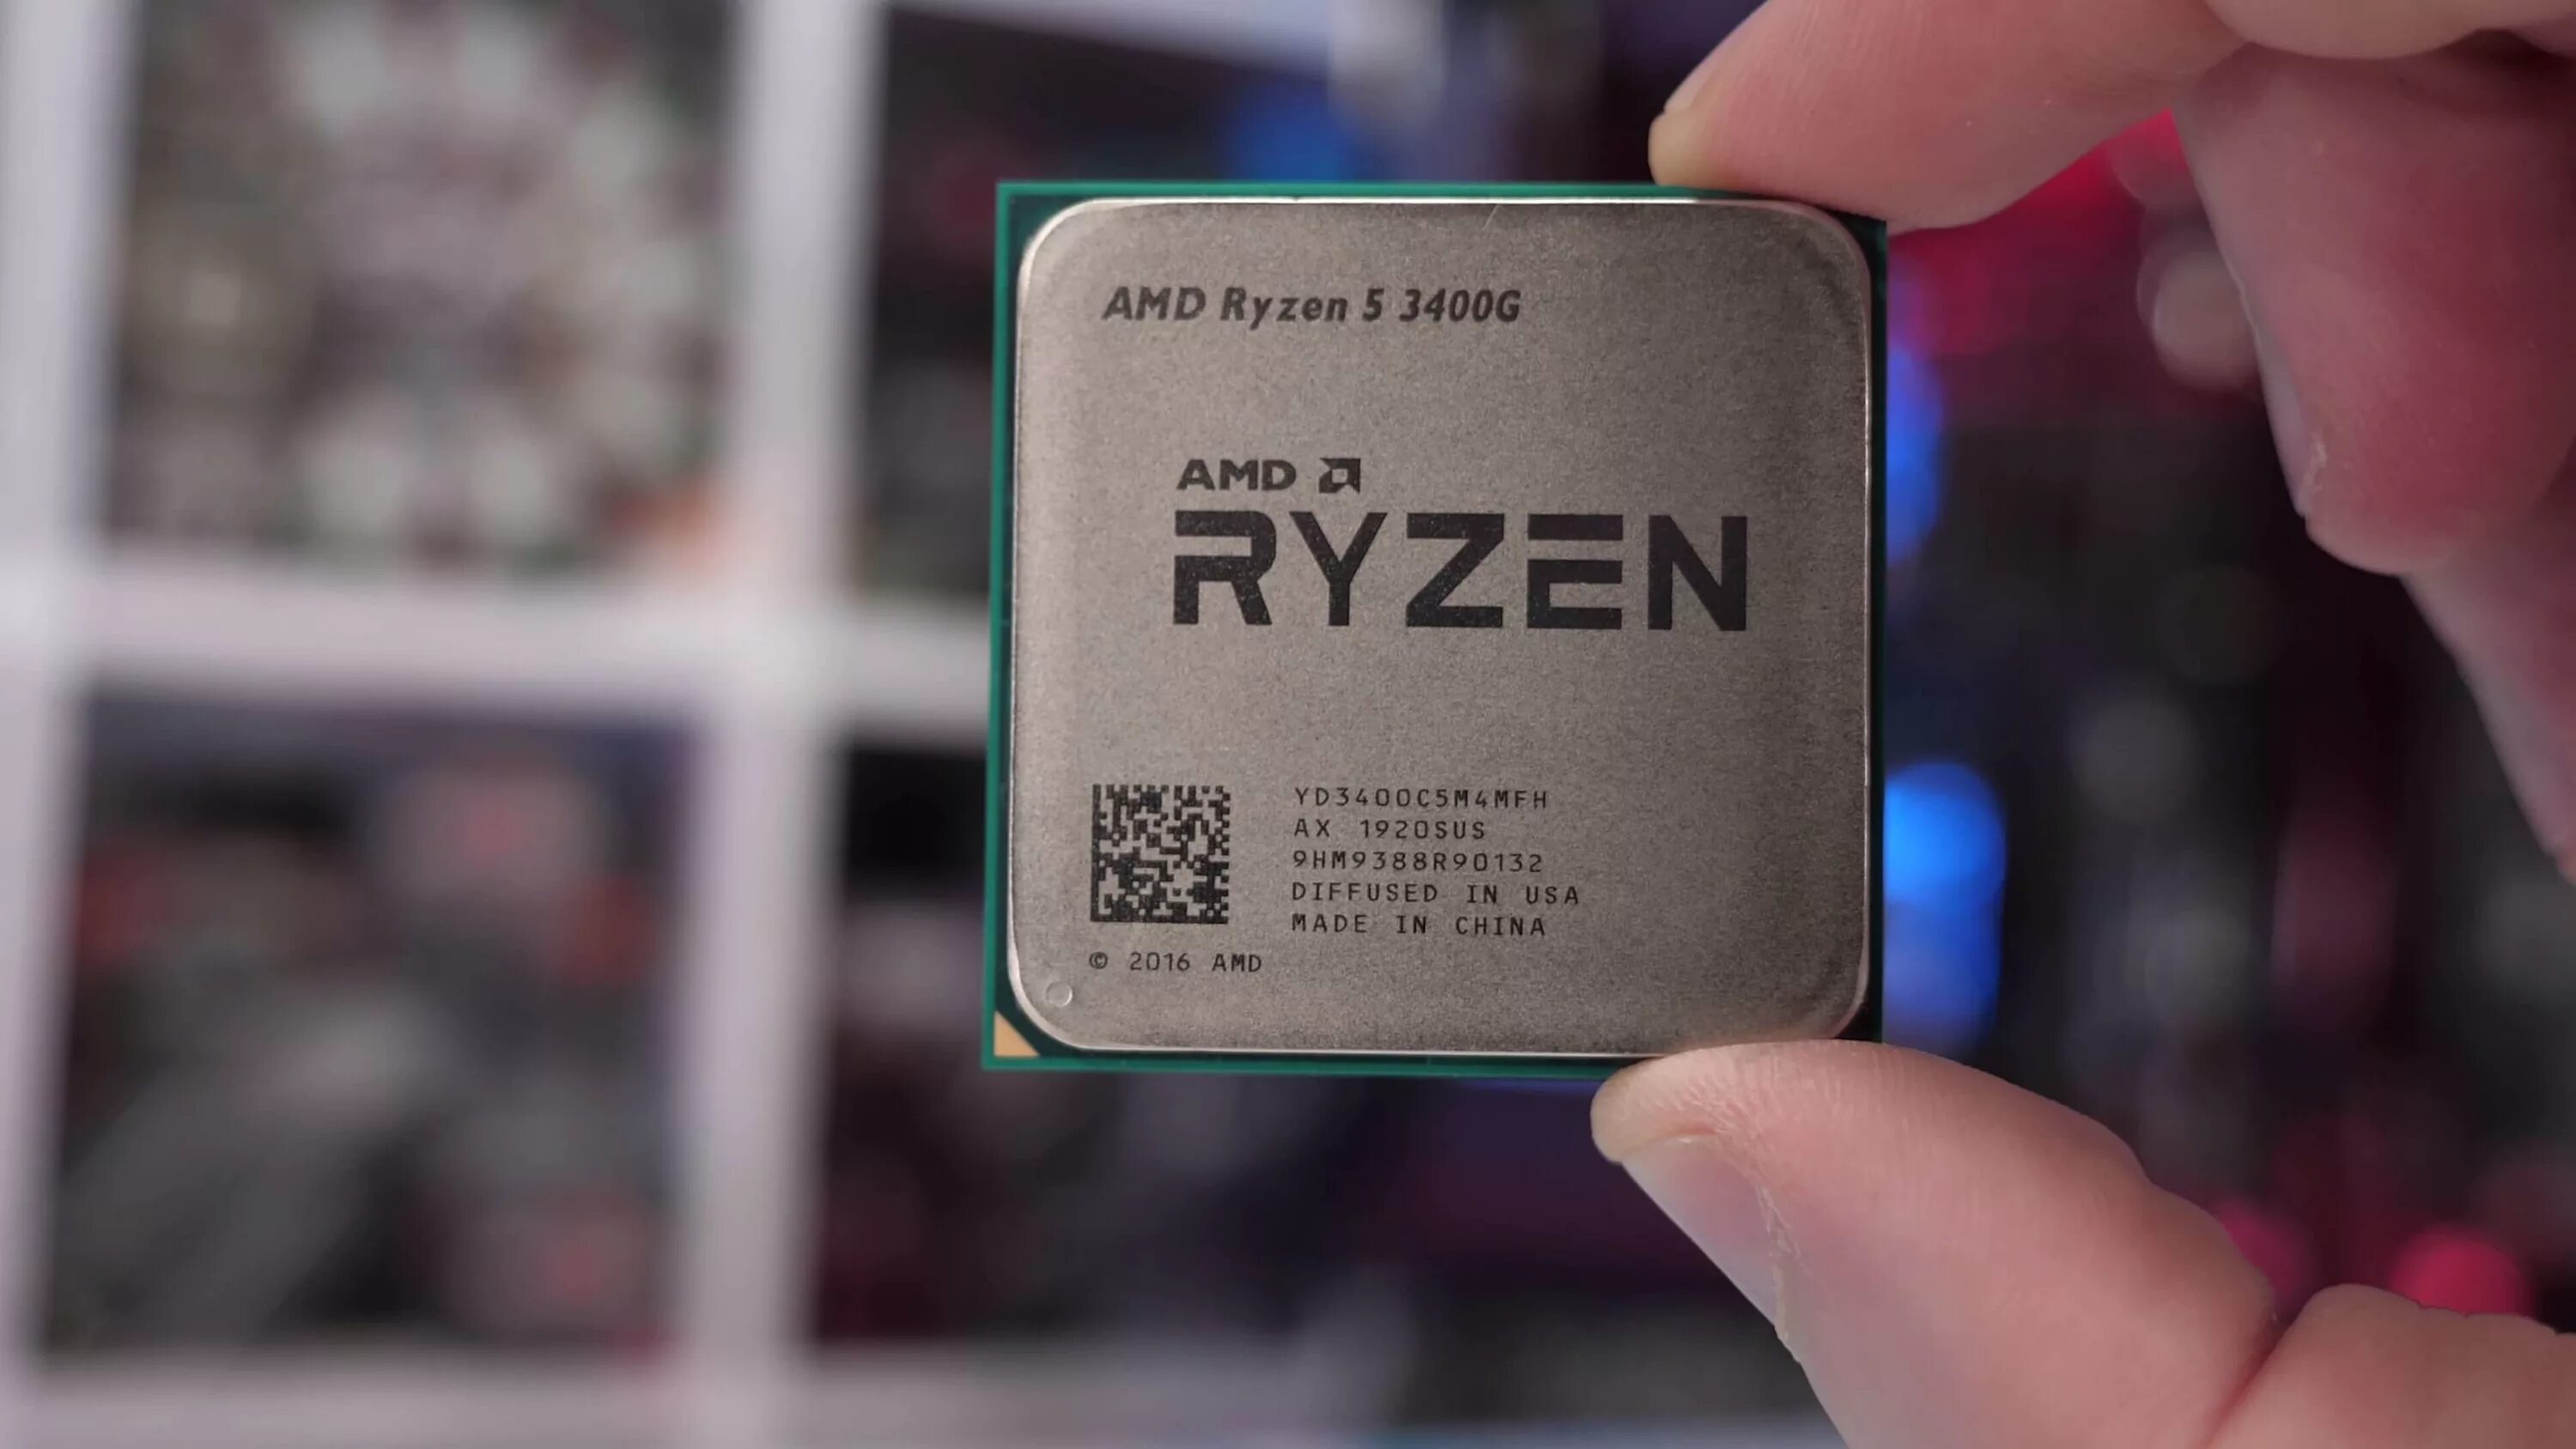 Ryzen 5 3400g. Процессор AMD Ryzen 5 3400g. Процессор AMD Ryzen 5 Pro 2400g. Ryzen r5 5600g. 5 3400g купить